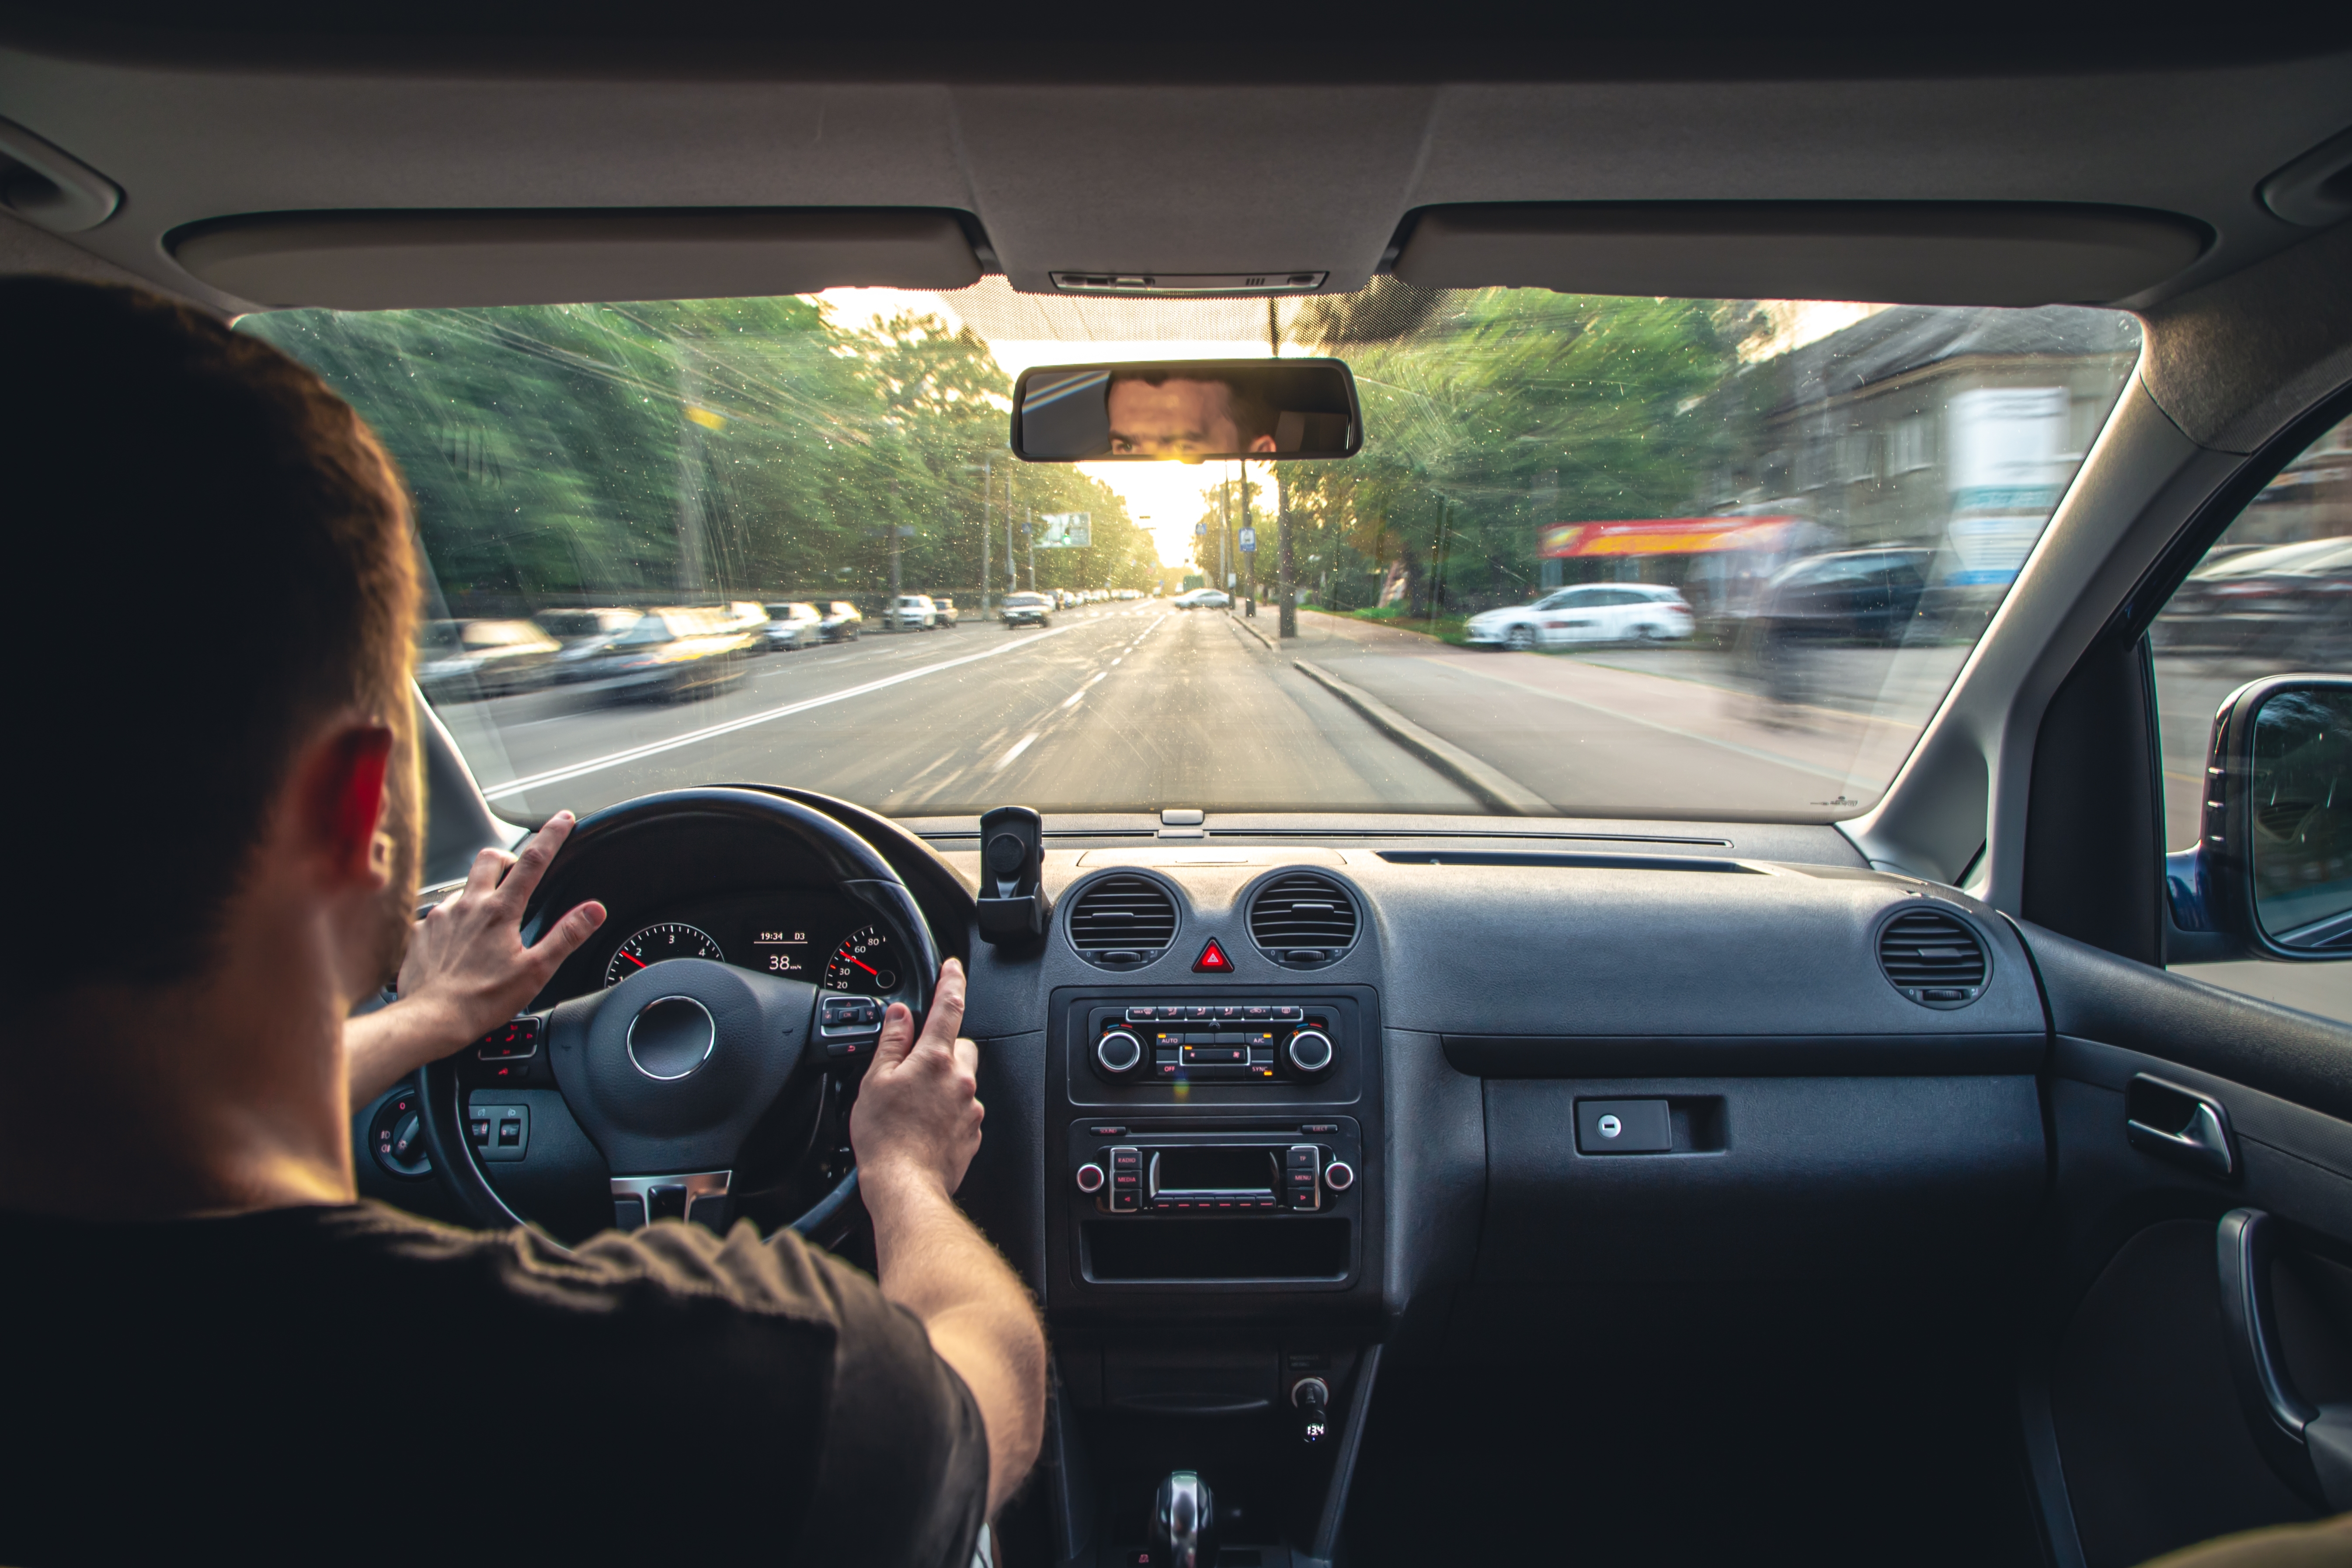 Hands on the wheel | Source: Shutterstock